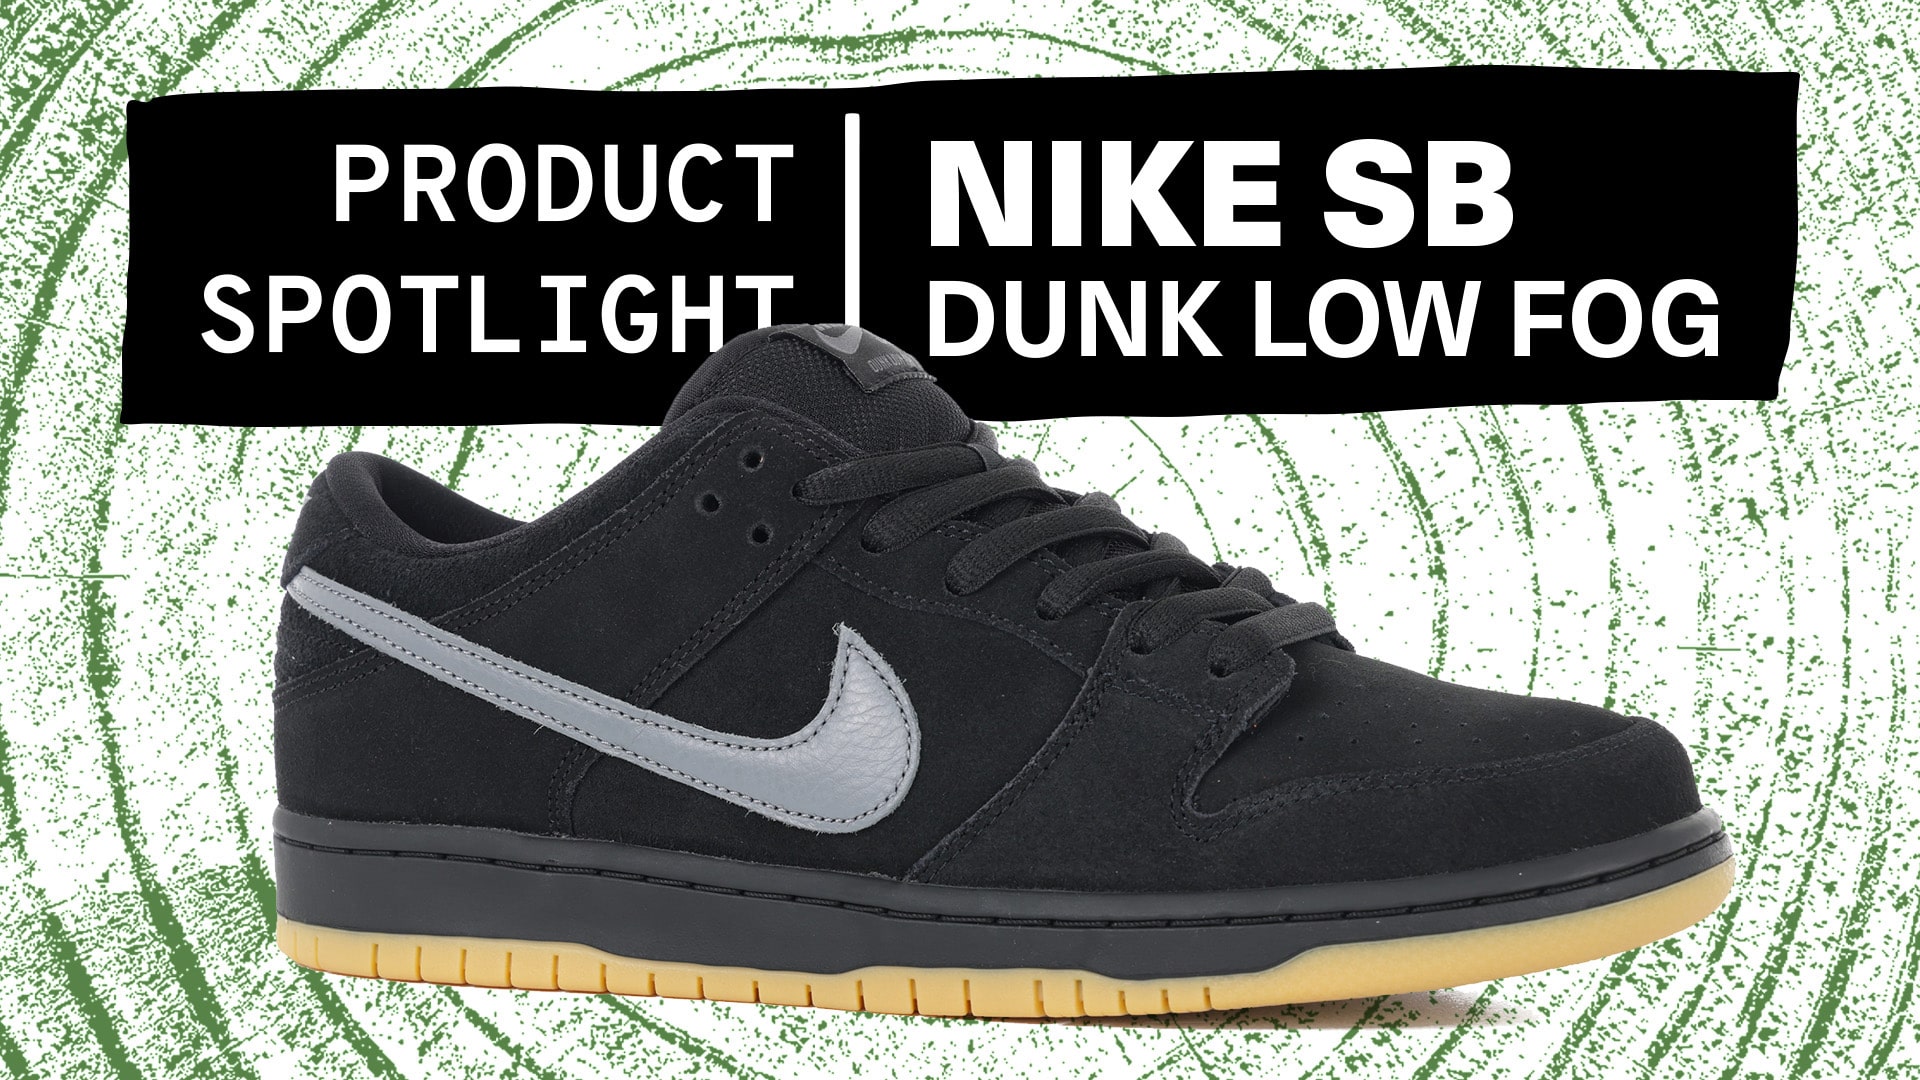 Nike Dunk Low 'Deep Jungle' 8.5